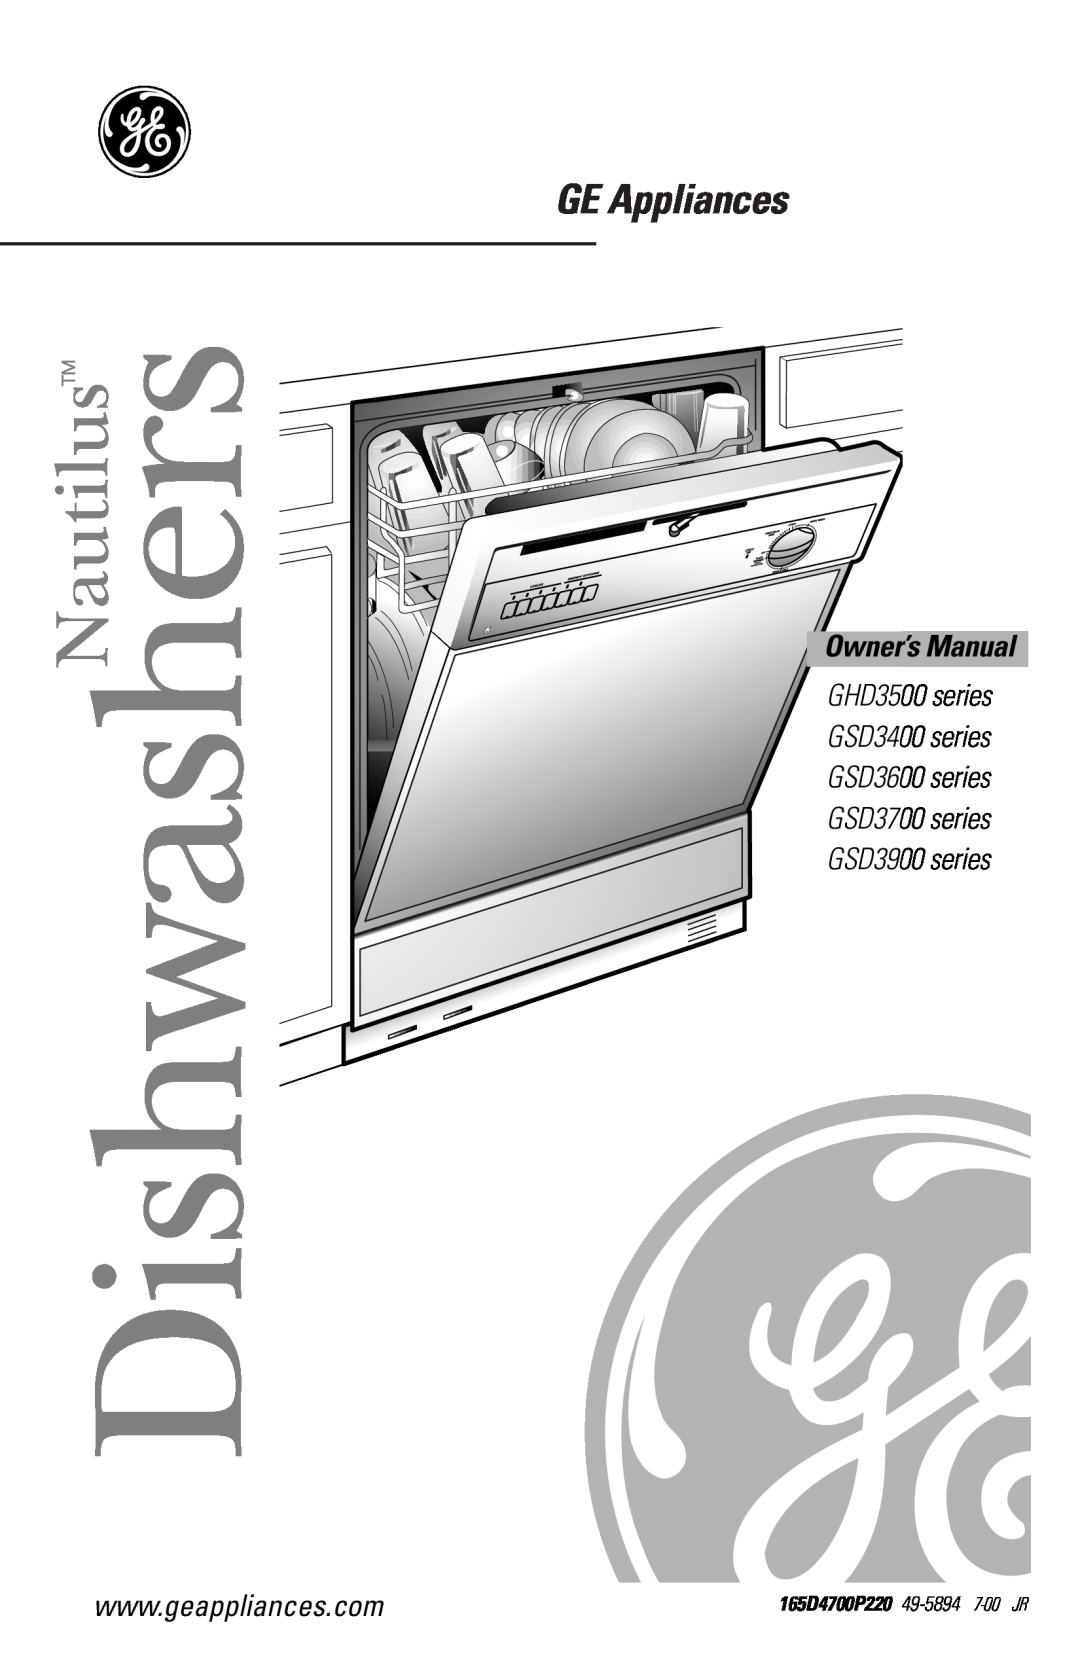 GE GSD3700 series owner manual GE Appliances, Owner’s Manual, DishwashersNautilus, 165D4700P220 49-5894 7-00JR 